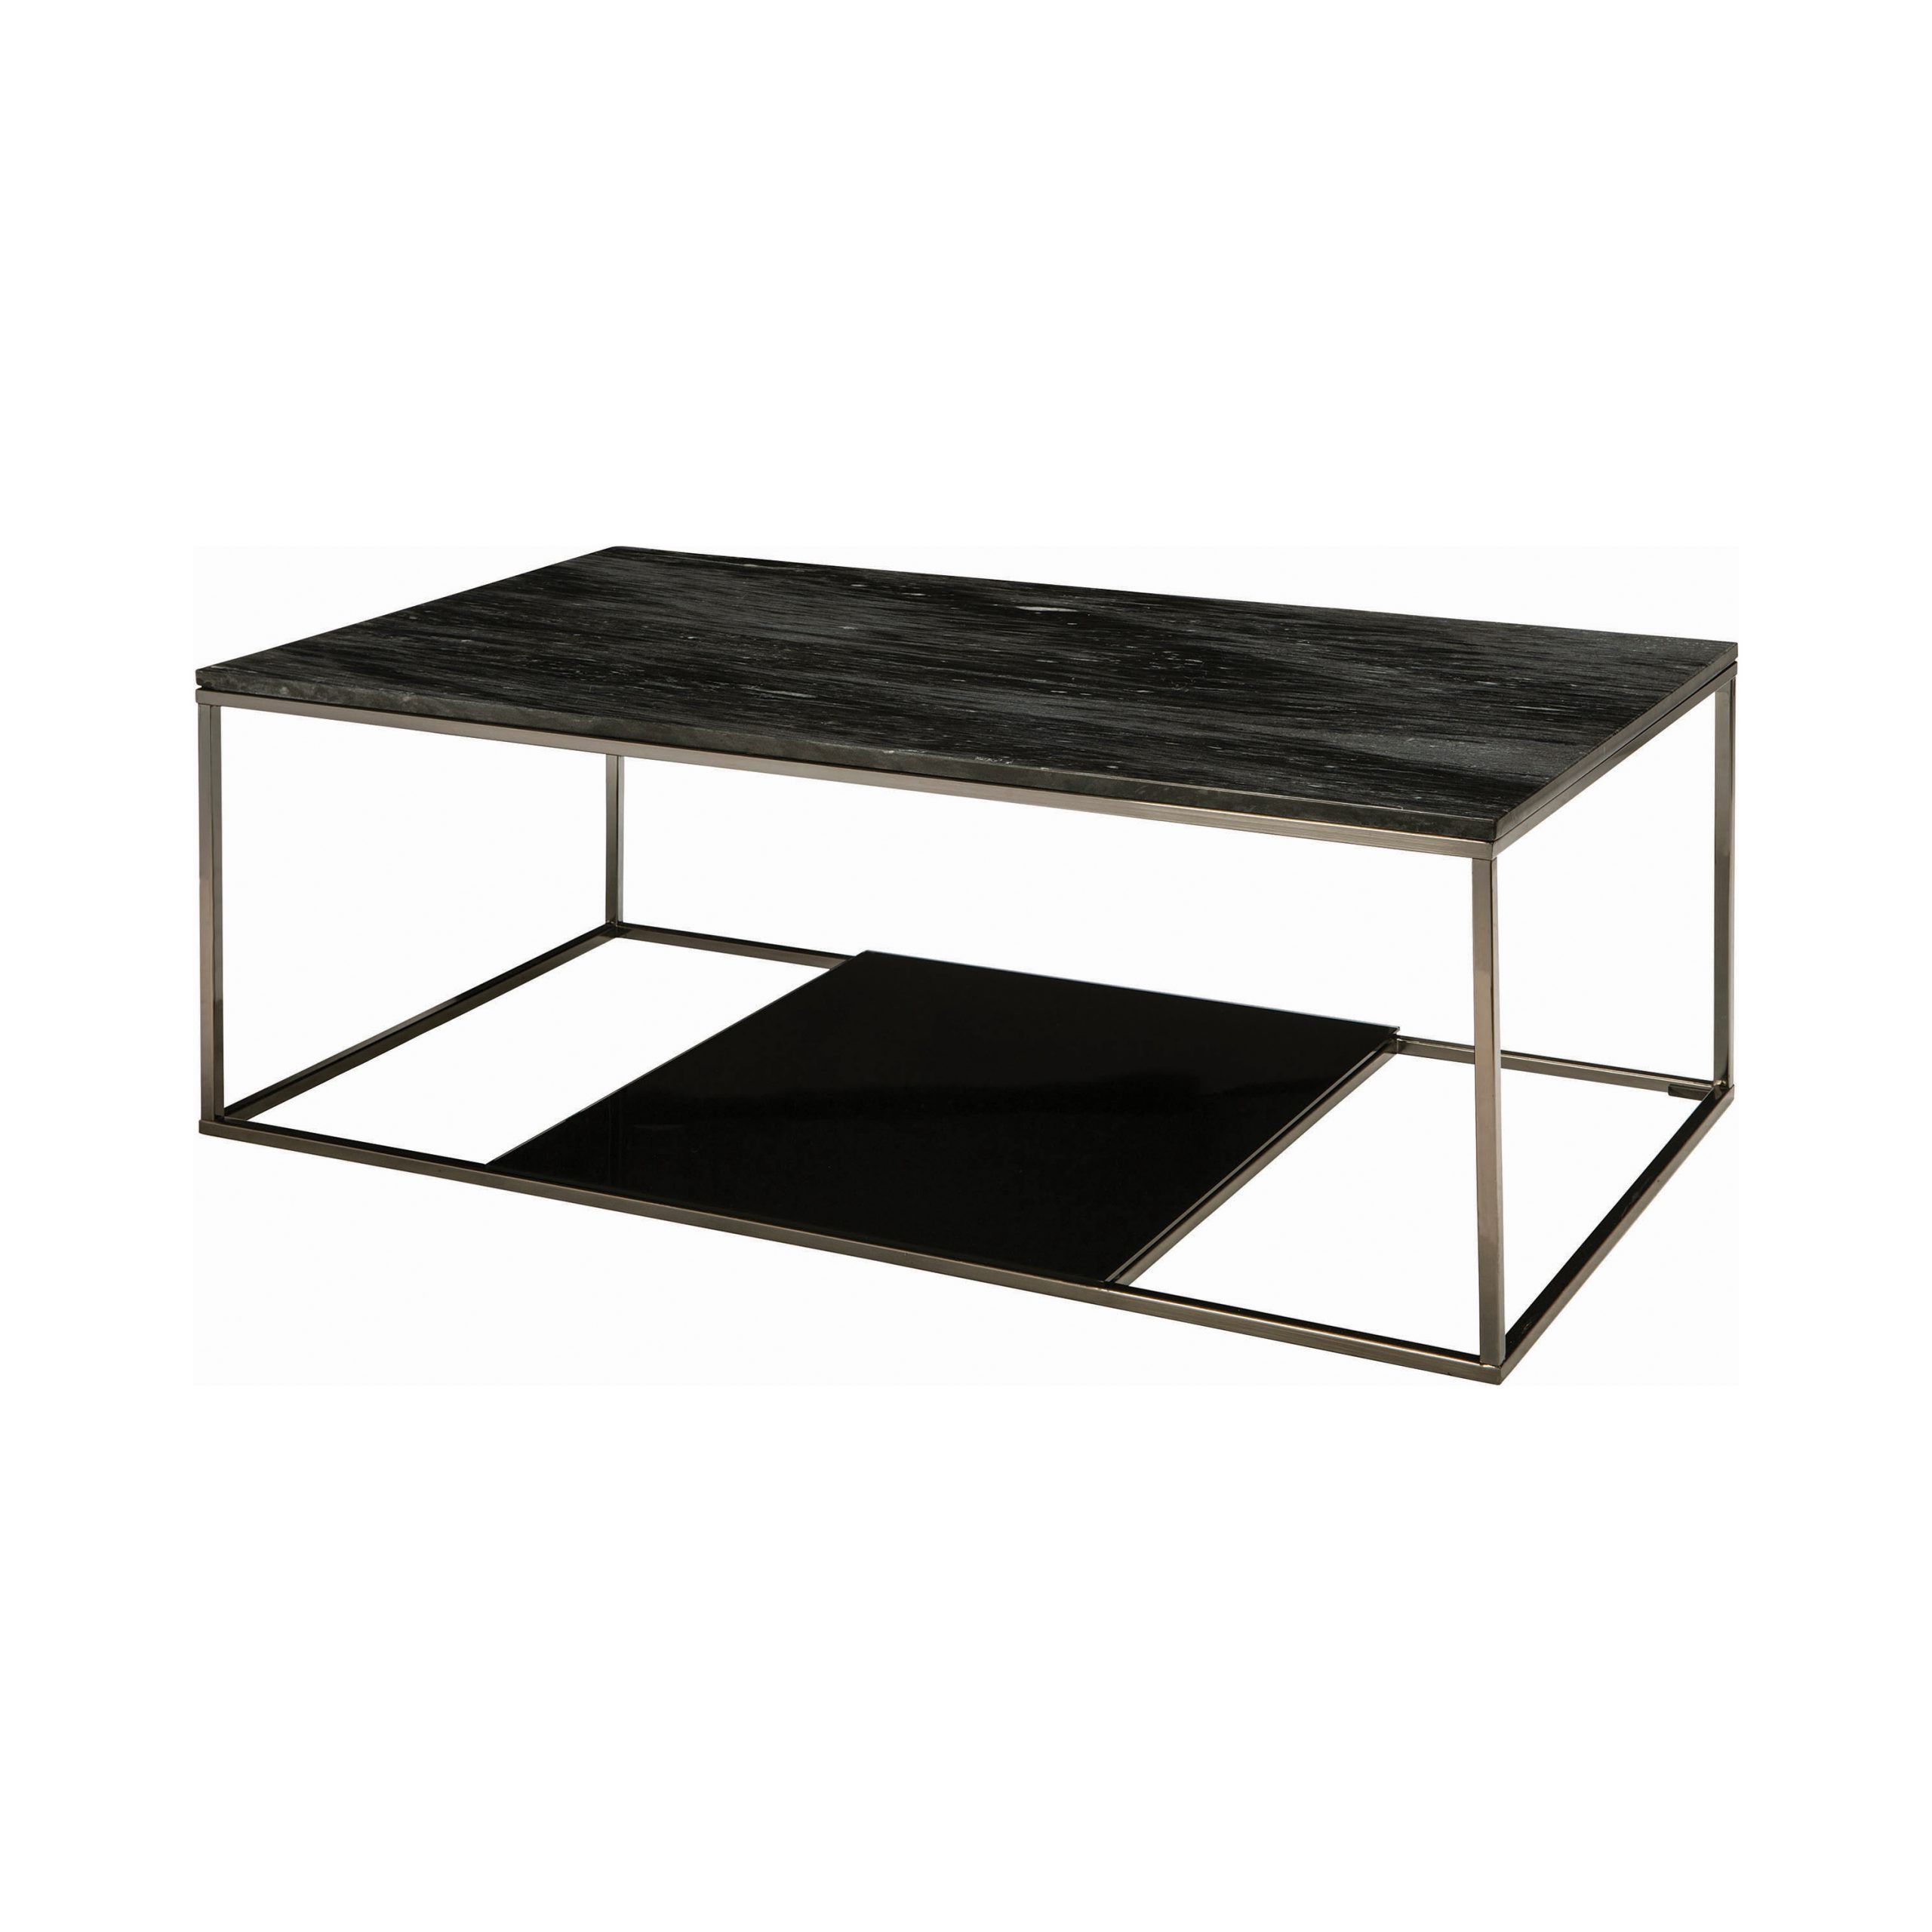 Schwartzman 1 Shelf Rectangular Coffee Table Black For Most Recent 1 Shelf Coffee Tables (View 18 of 20)